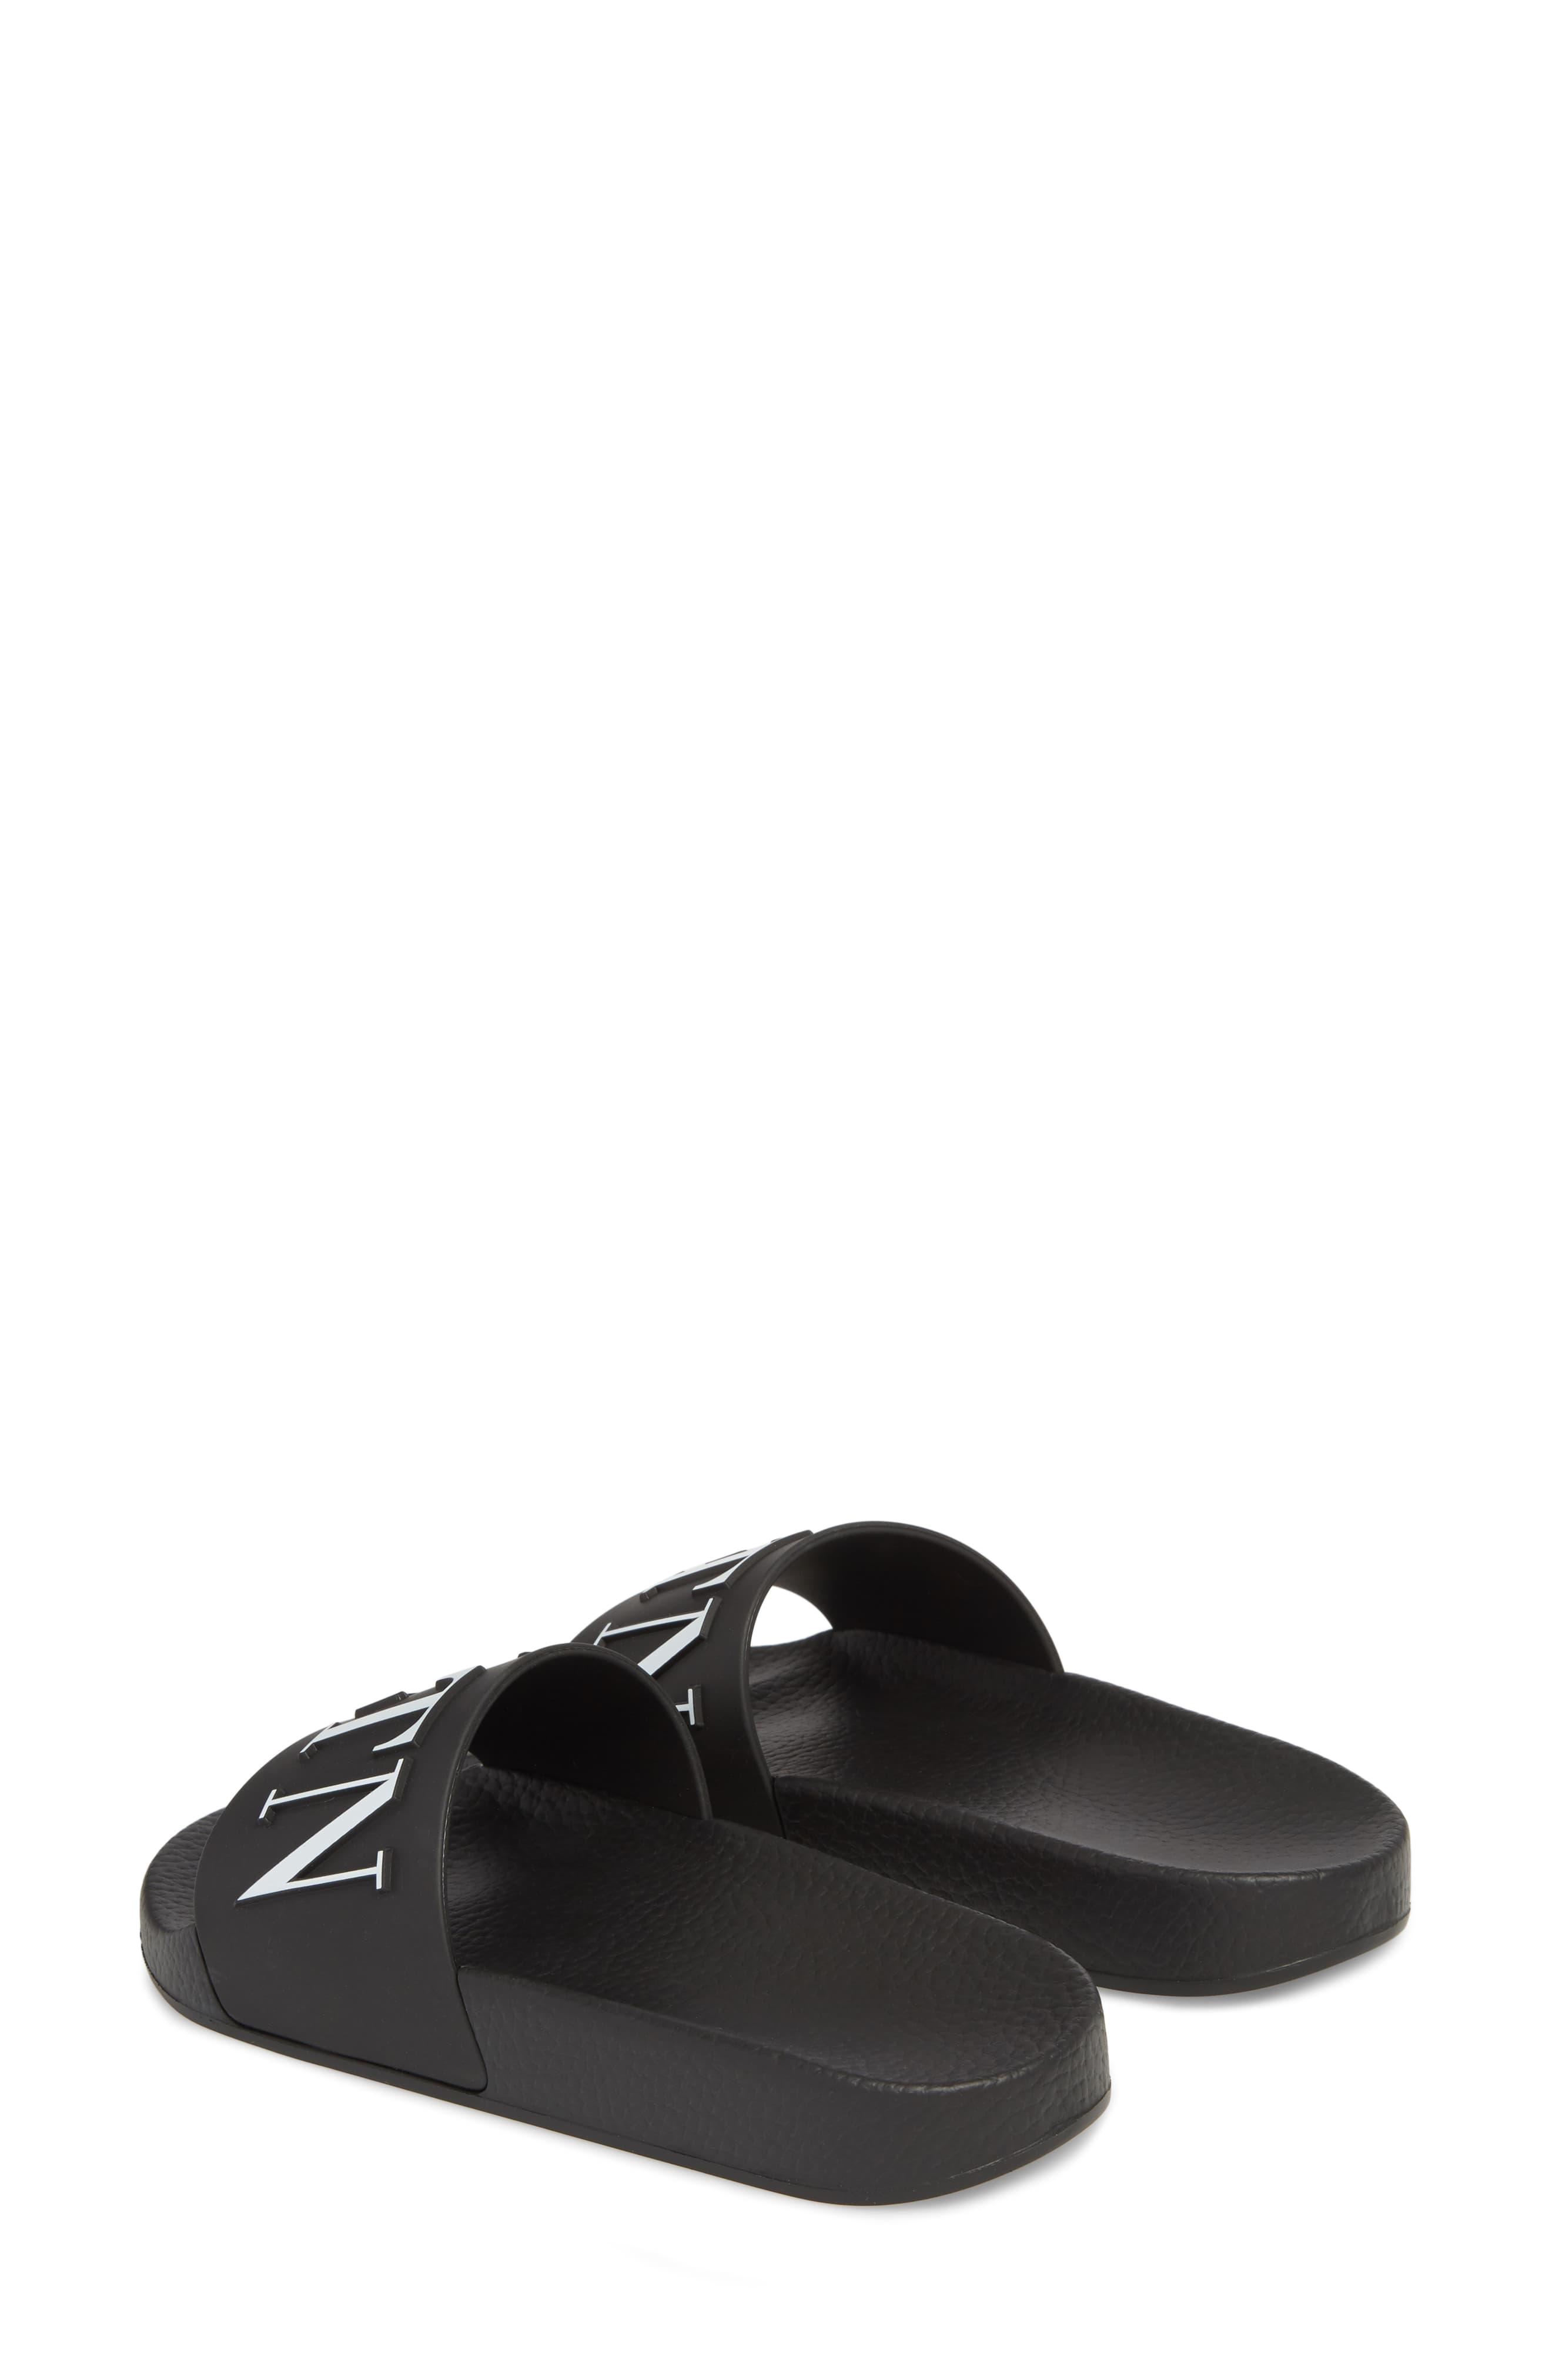 Valentino Vltn Pool Slide Sandal in Black - Save 42% - Lyst